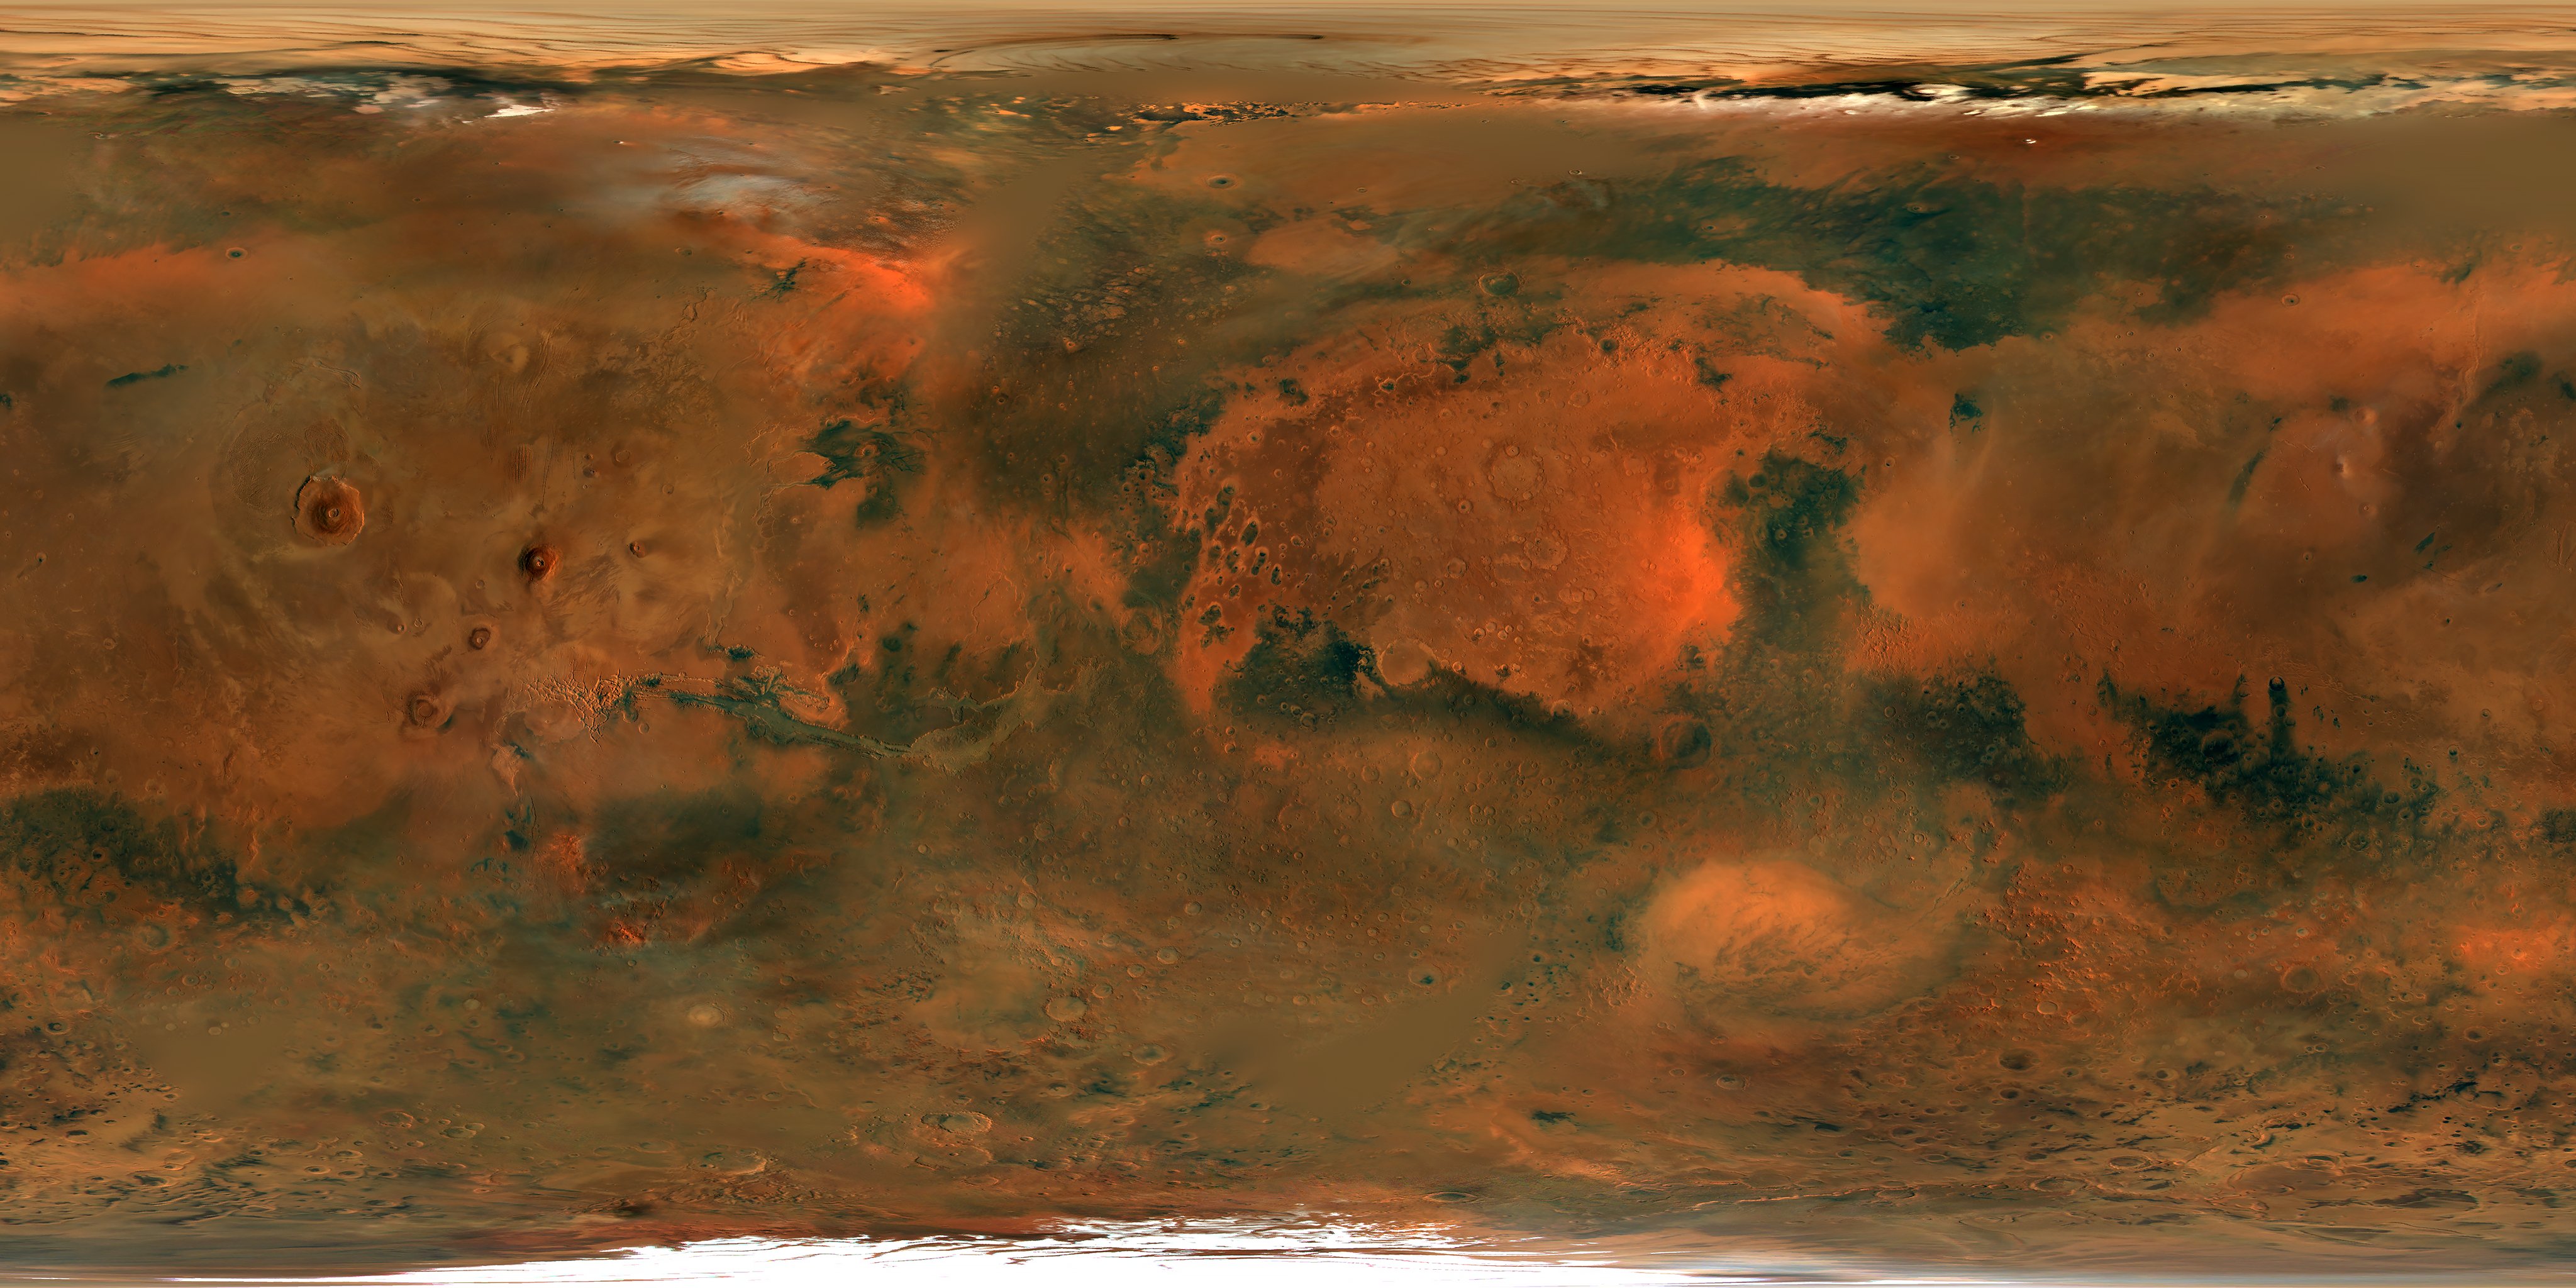 File:Mars Express (Artist's impression) ESA197108.jpg - Wikimedia Commons